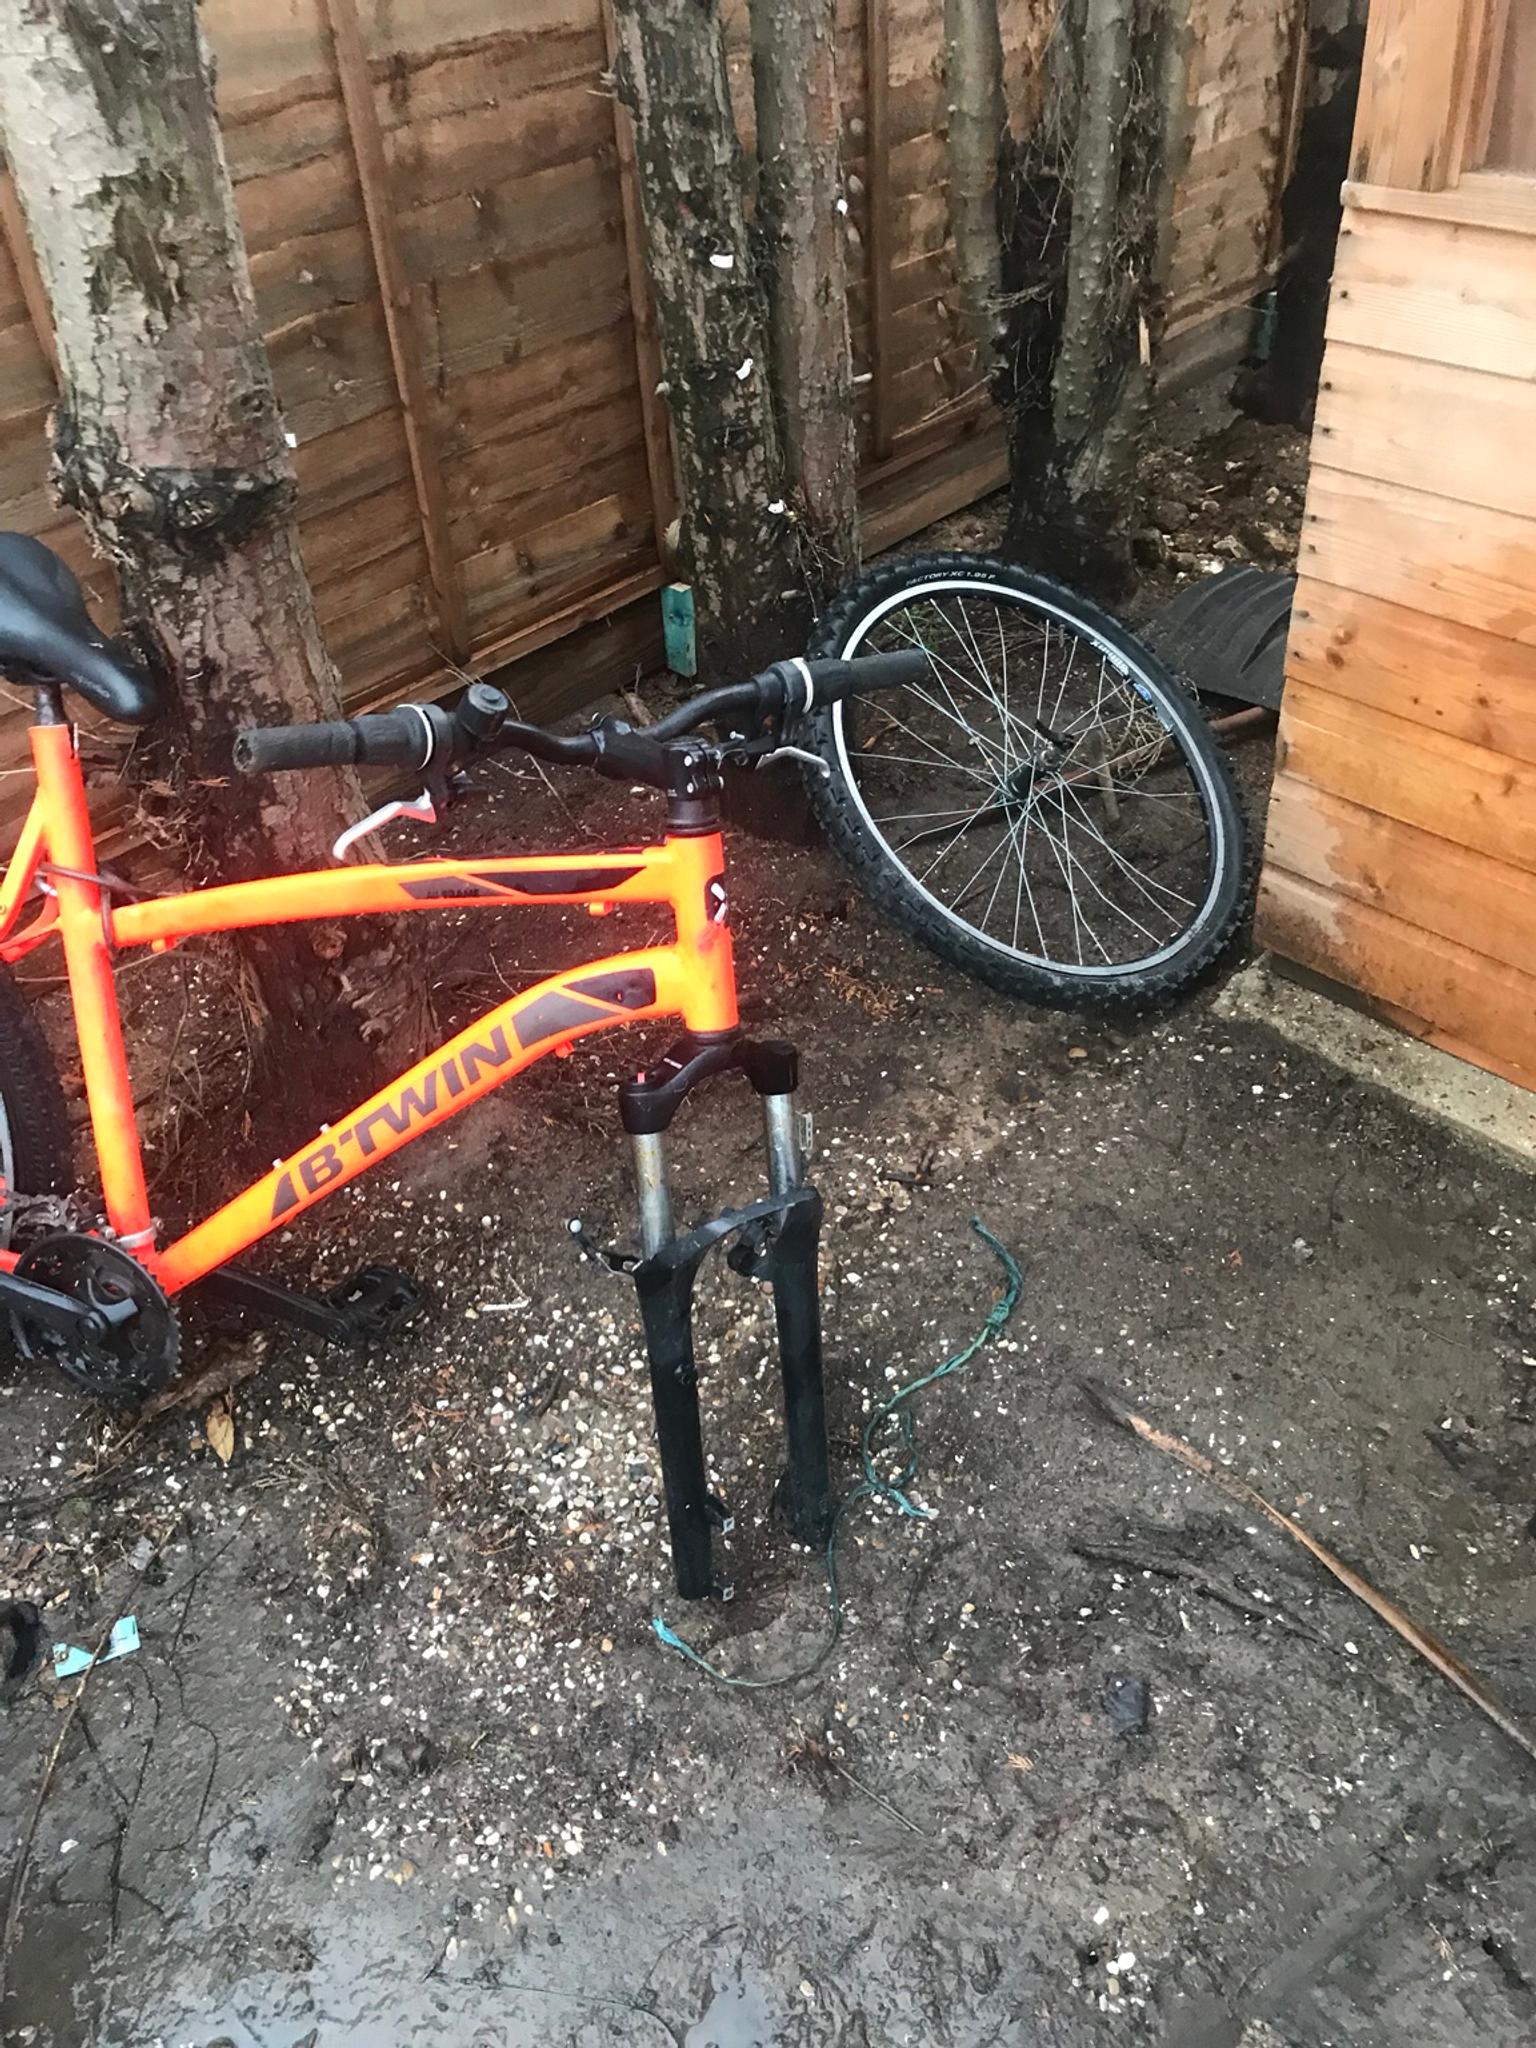 orange btwin bike